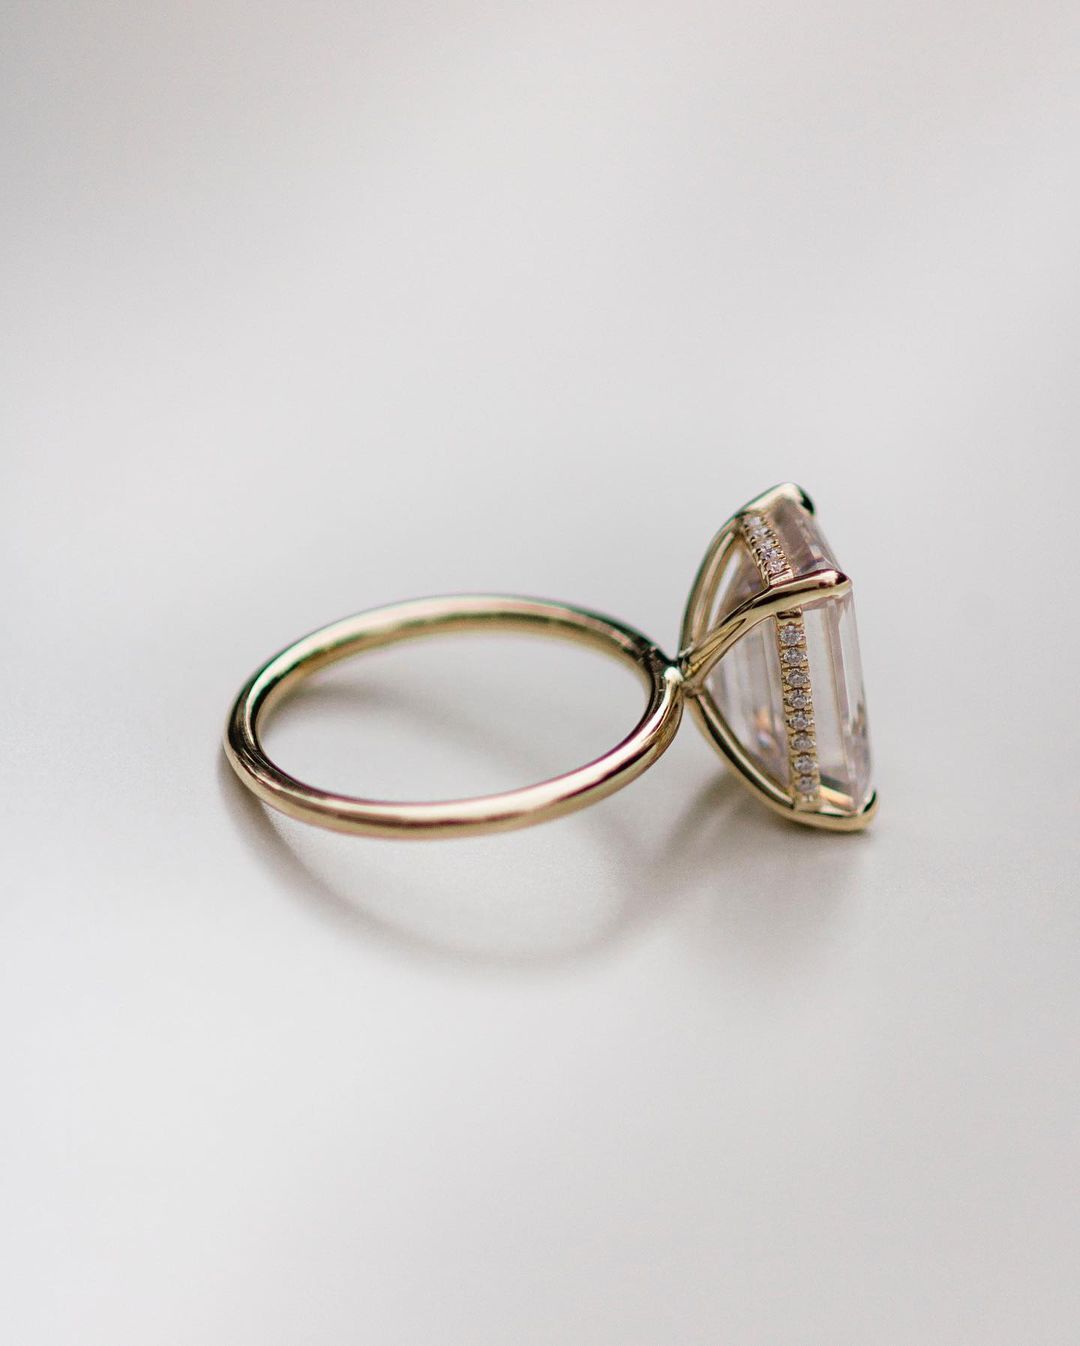 10 Ct Emerald Cut Moissanite Engagement Ring